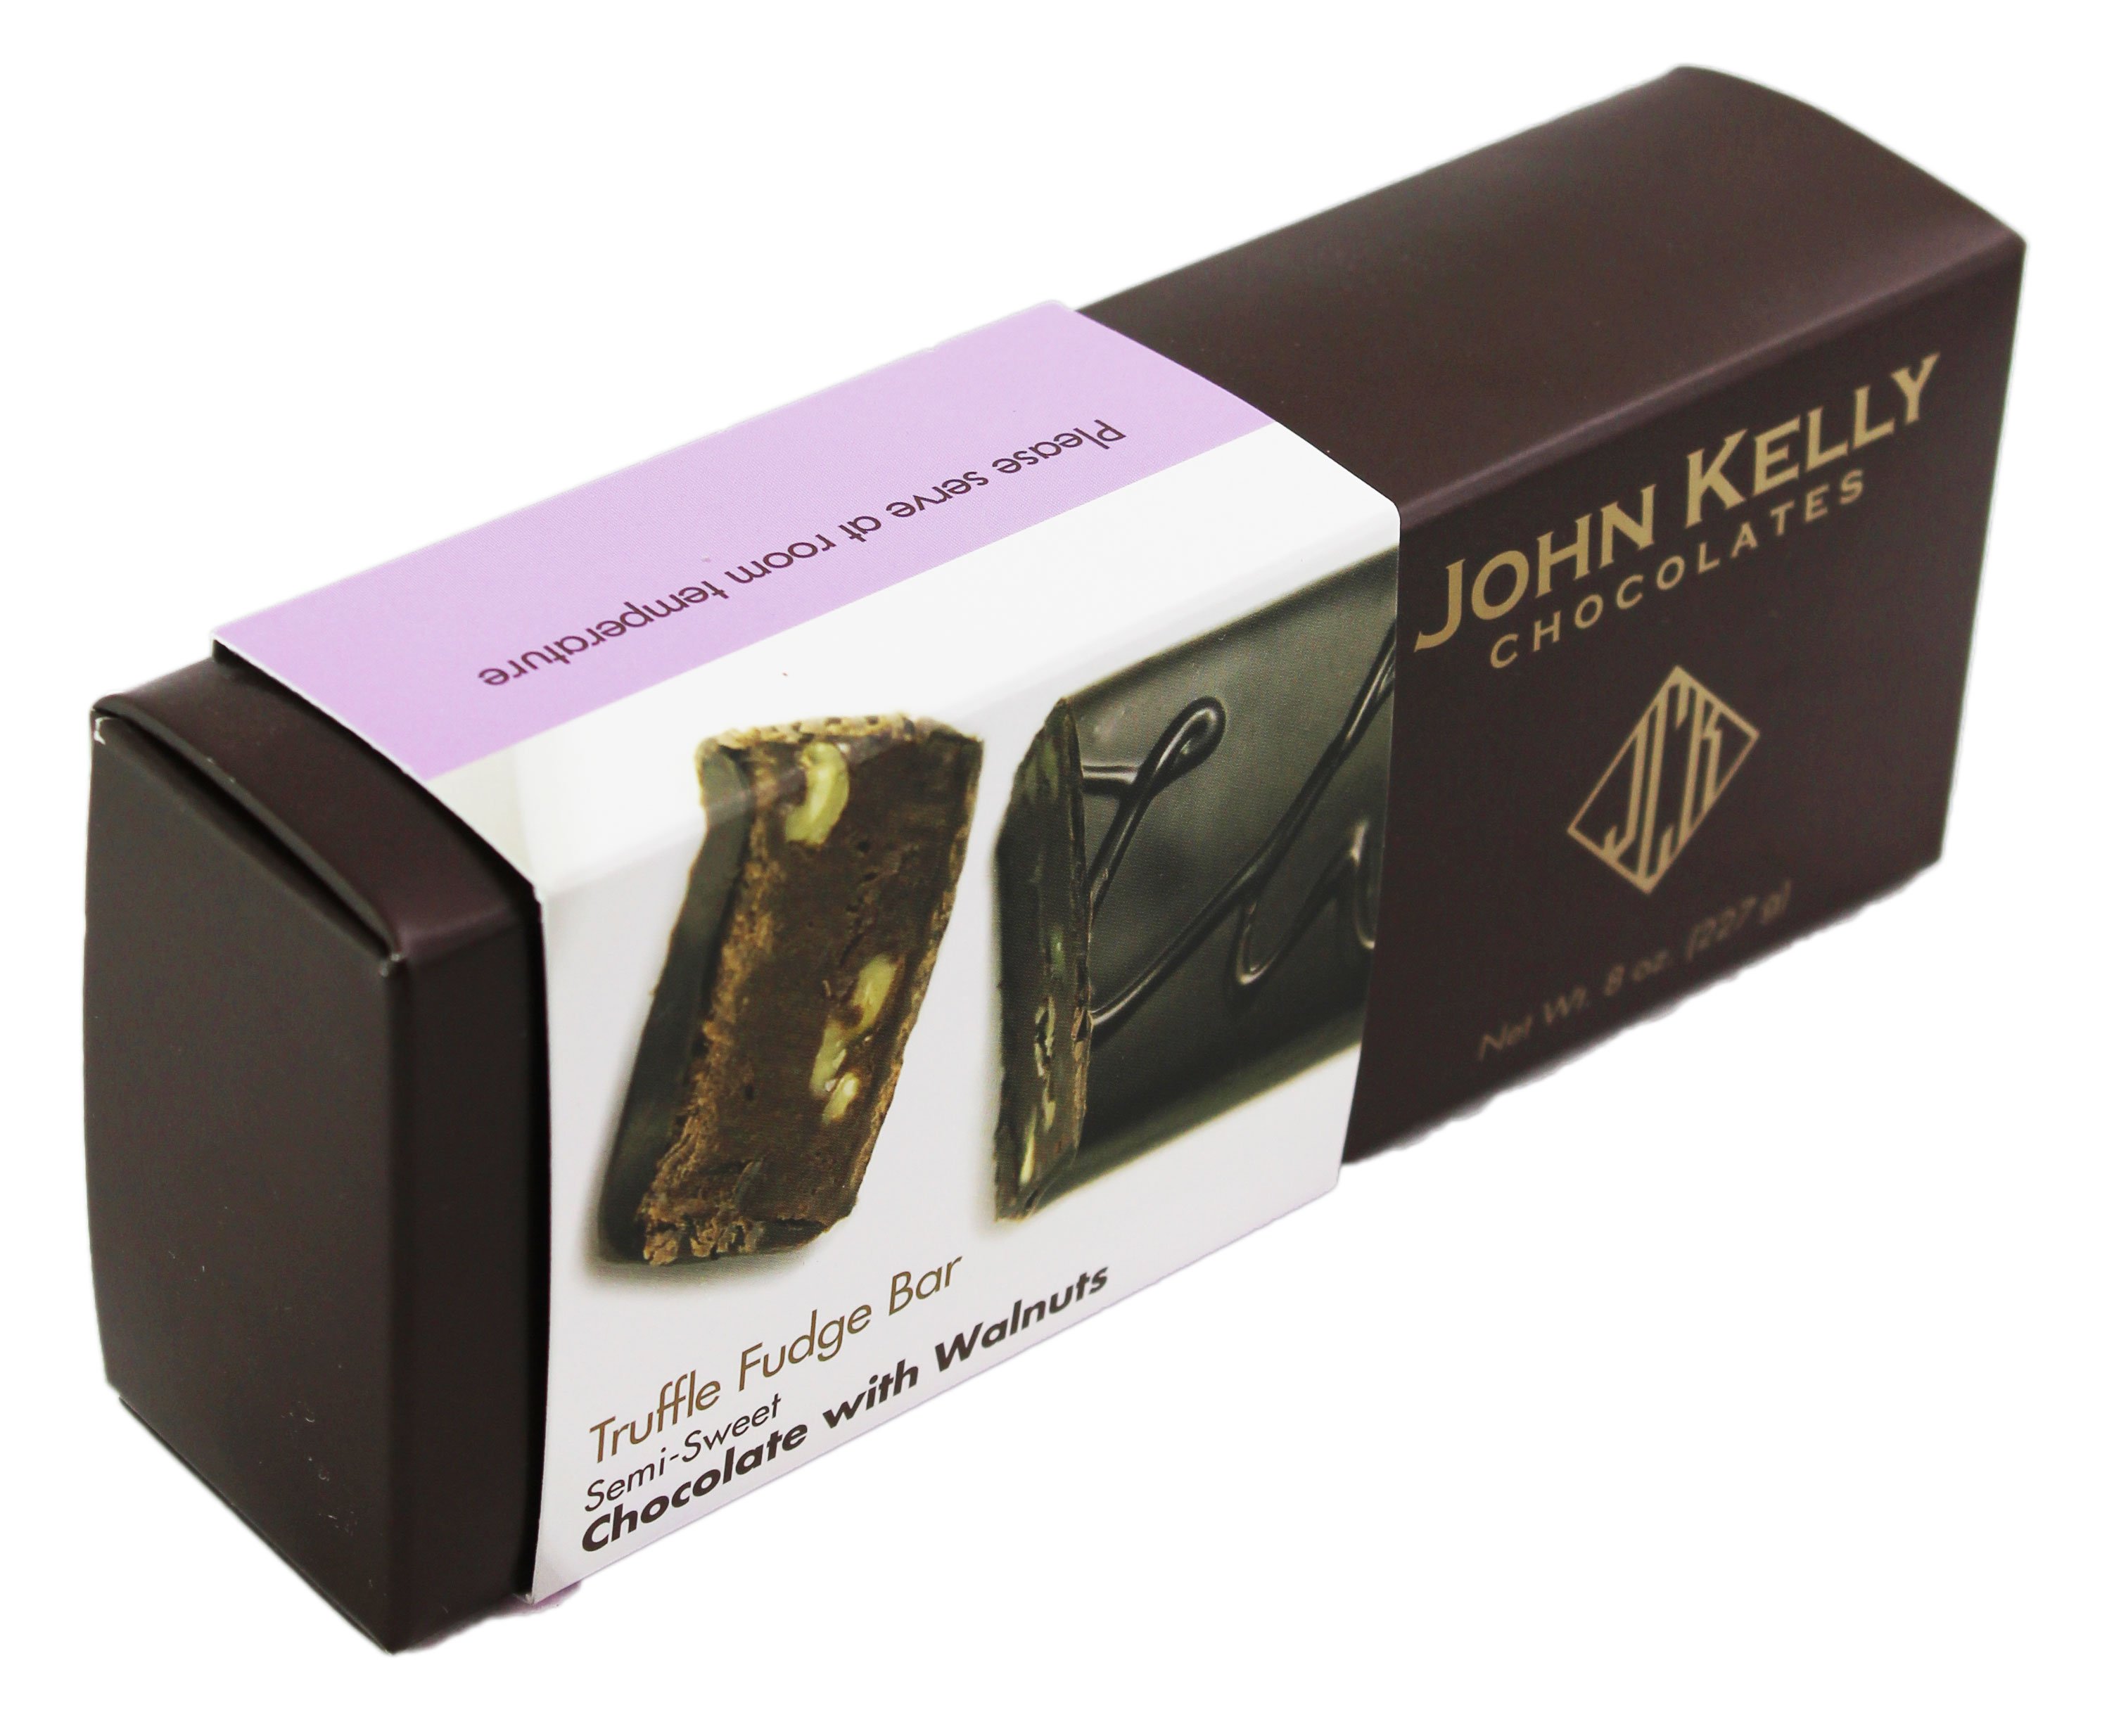 John Kelly Chocolates Semi Sweet Chocolate Truffle Fudge Bar With Walnuts Shop At H E B 6993